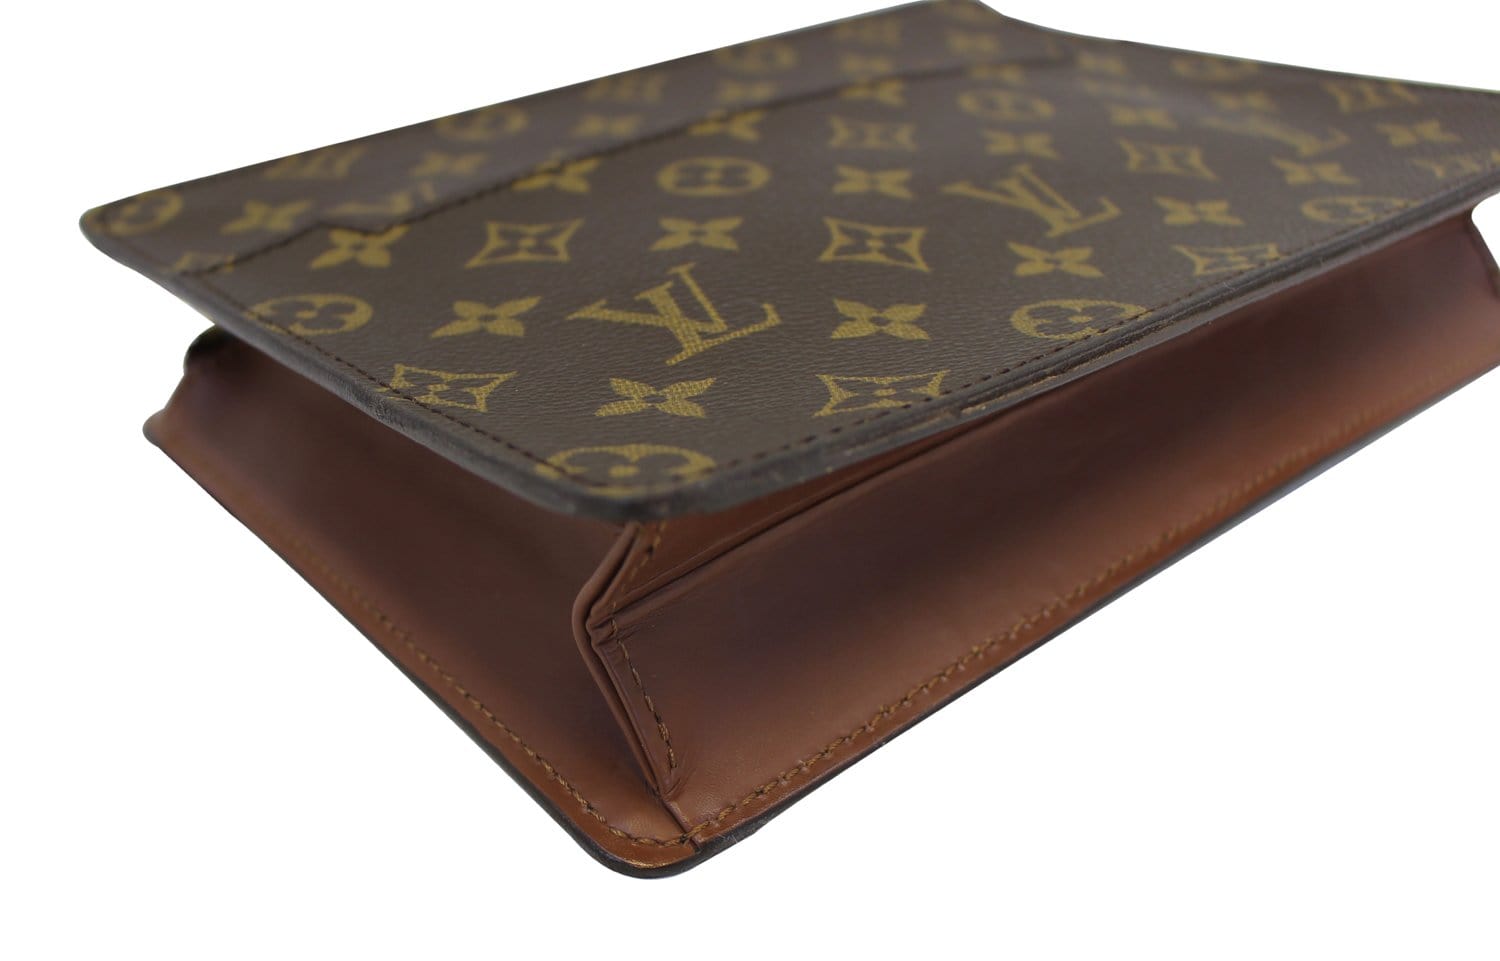 Louis Vuitton Monogram Pochette Homme Clutch Bag Accessories Bag M51795  Brown